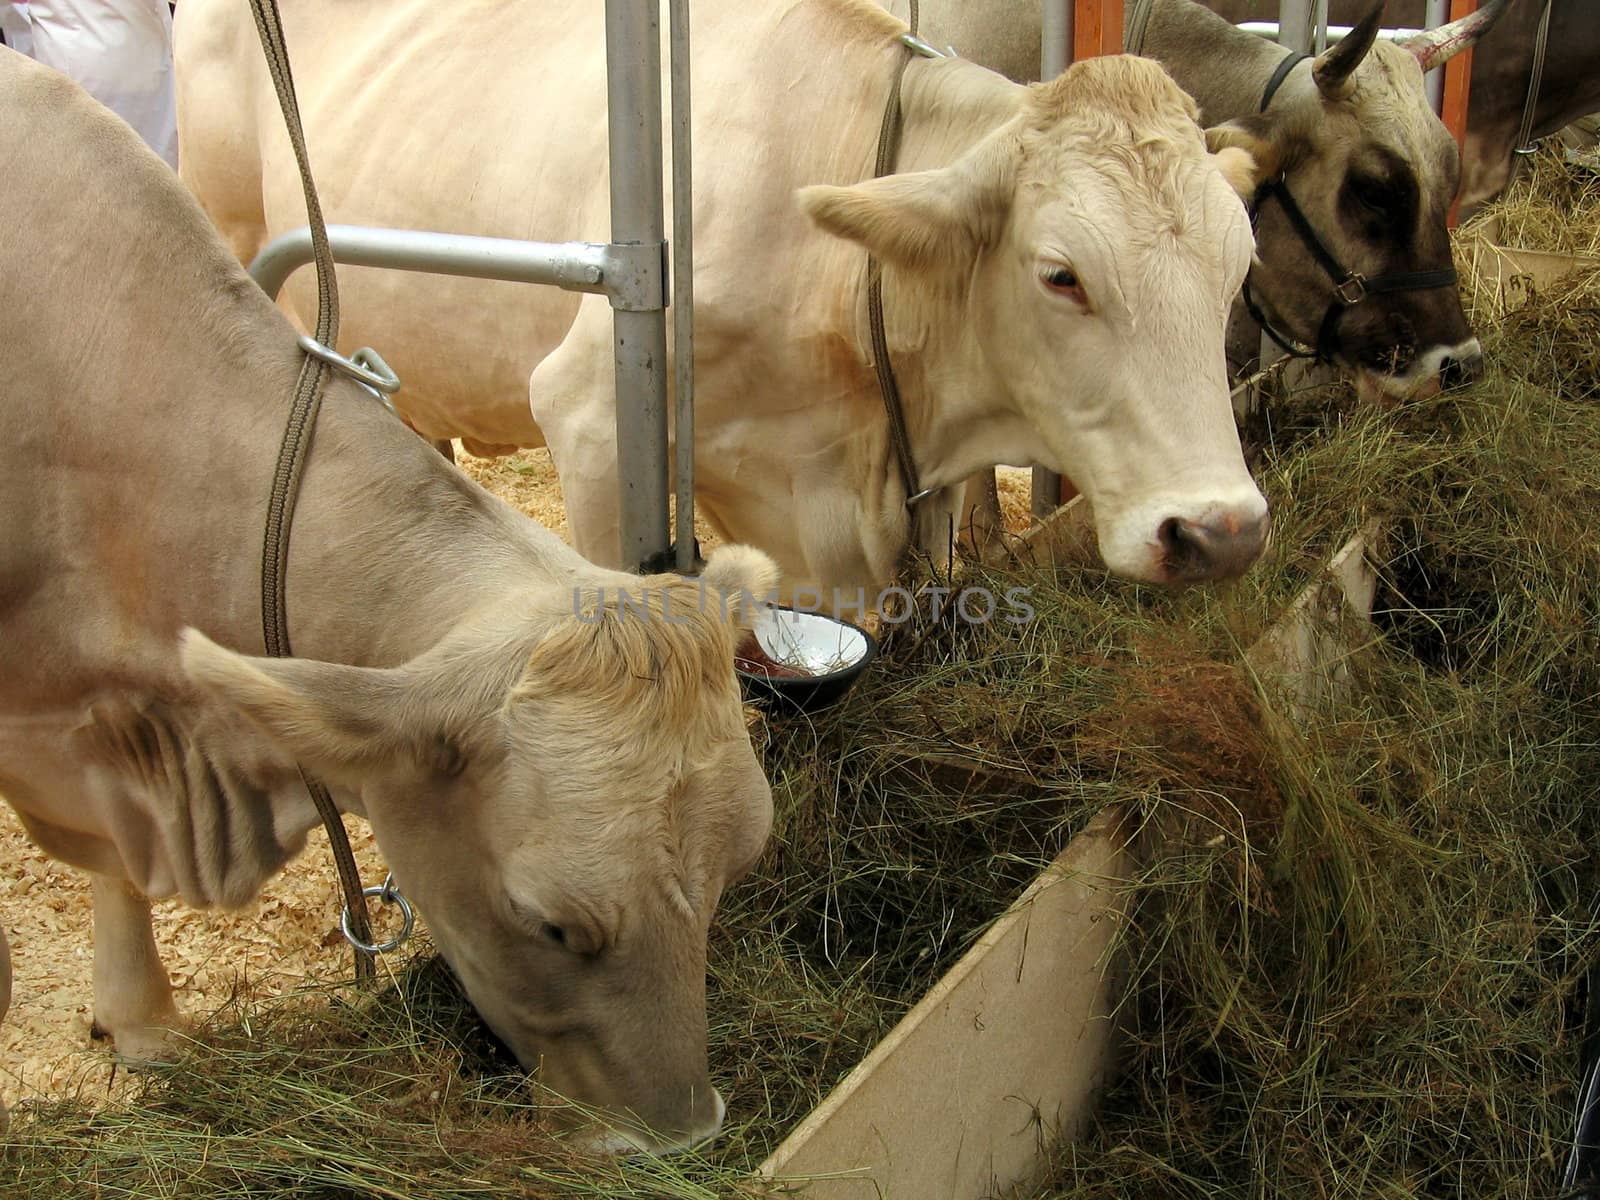 Three cows eat hay at the farm exhibition